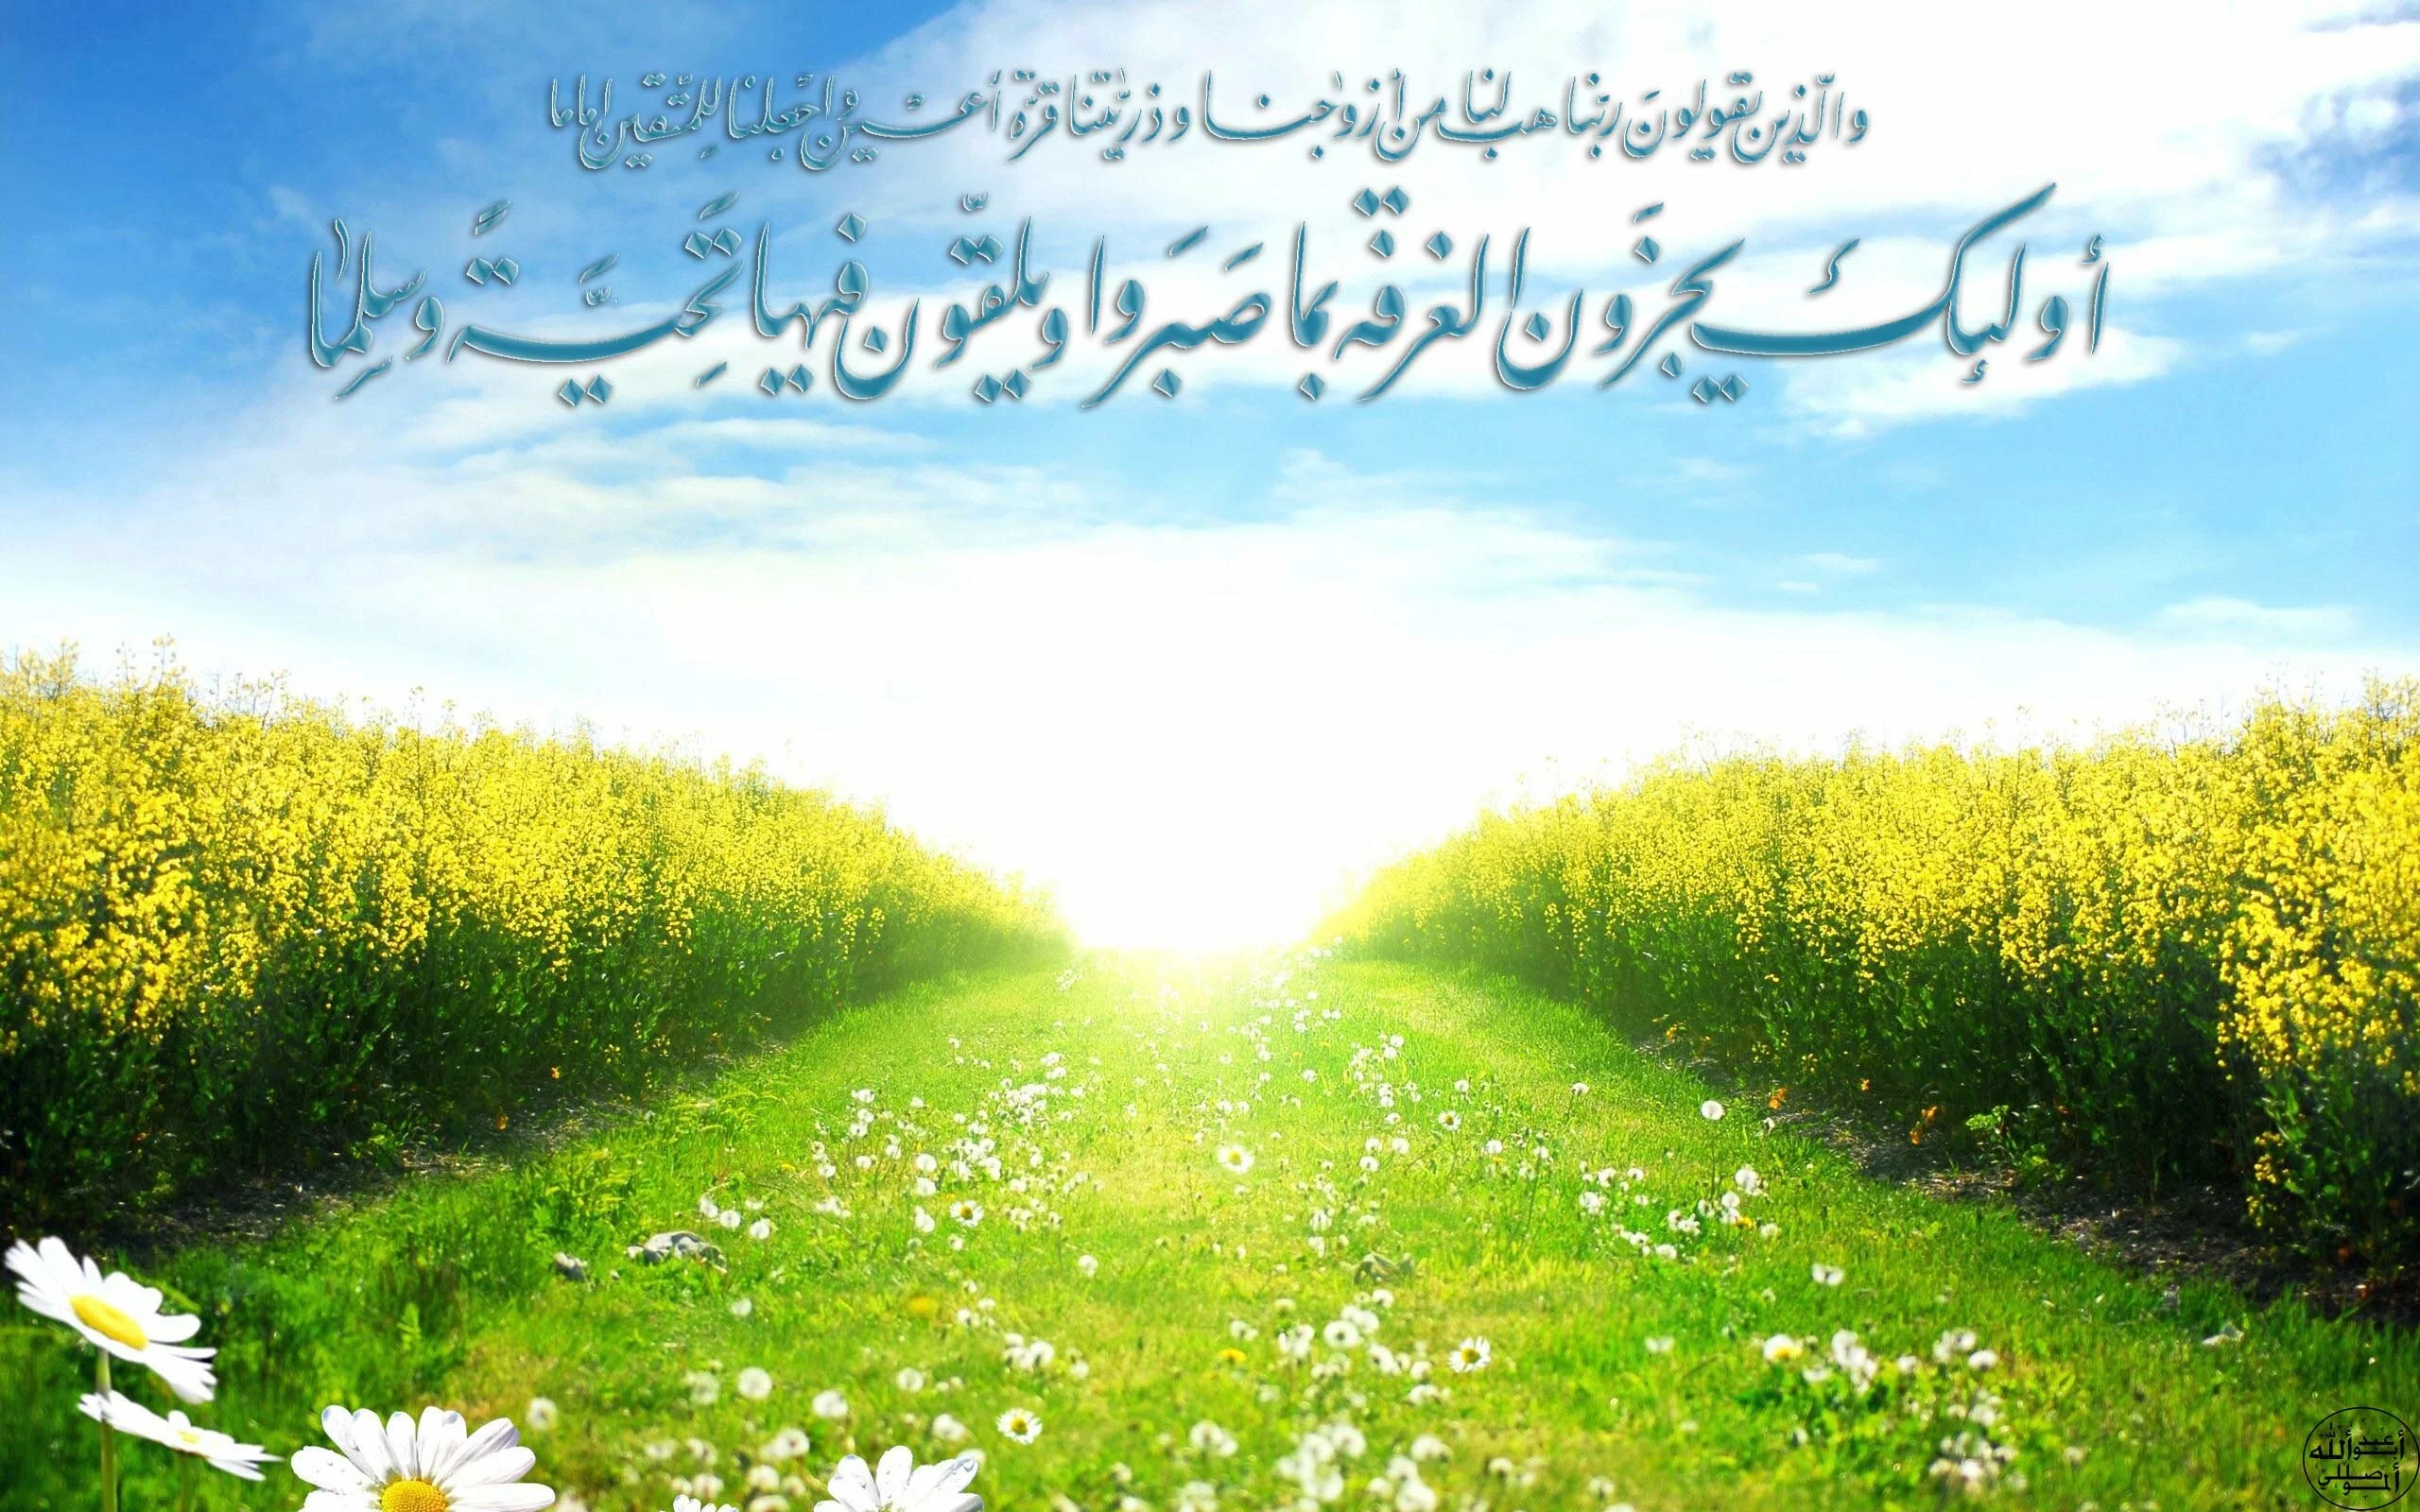 Quran Ayaah in Flower - Islamic Wallpaper